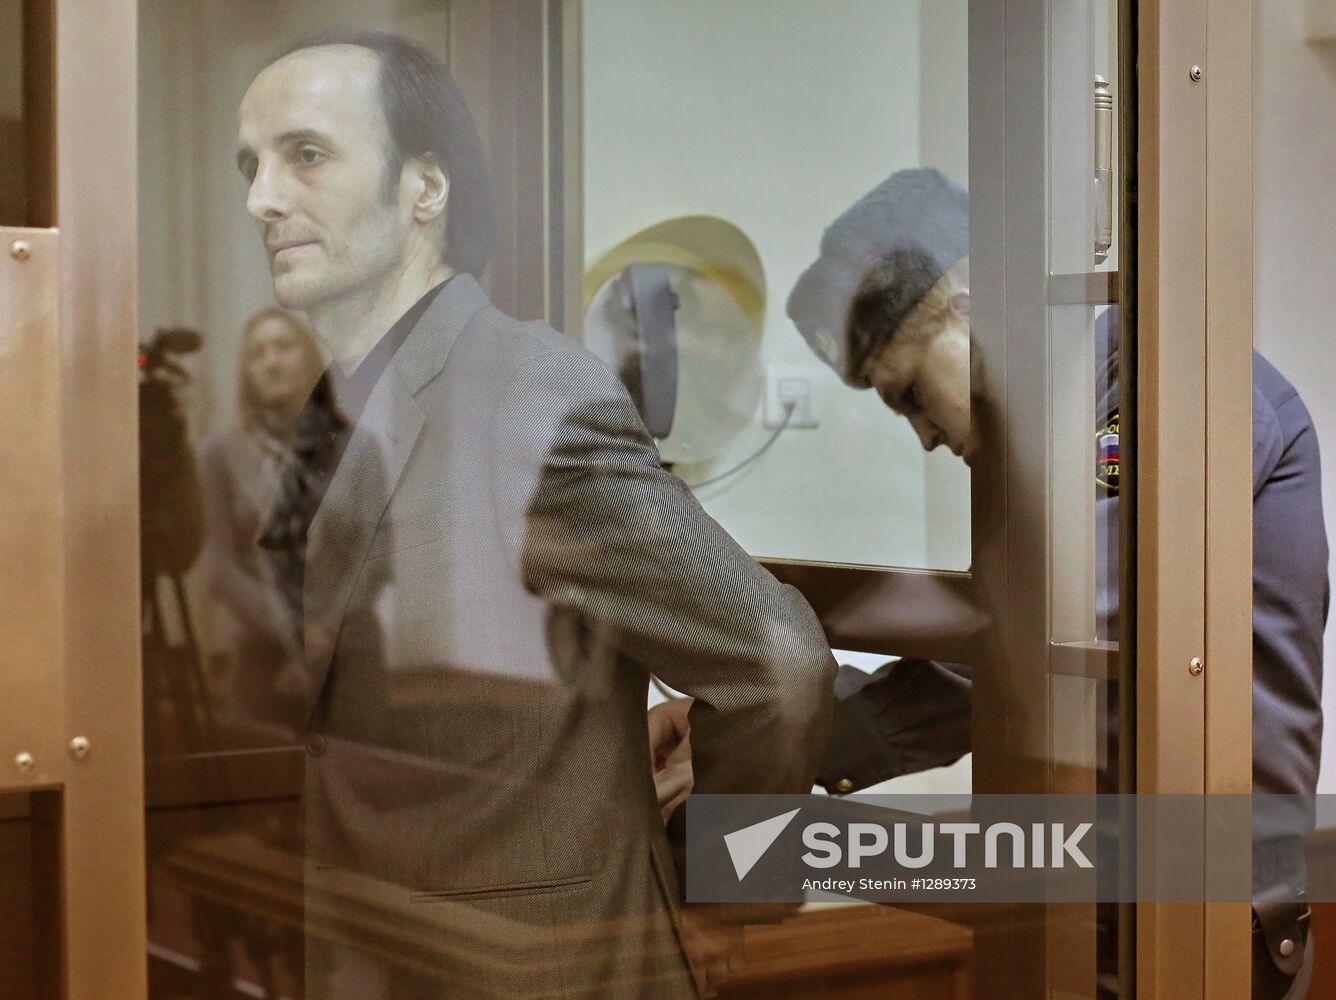 Court hearing of Yusup Temerkhanov case